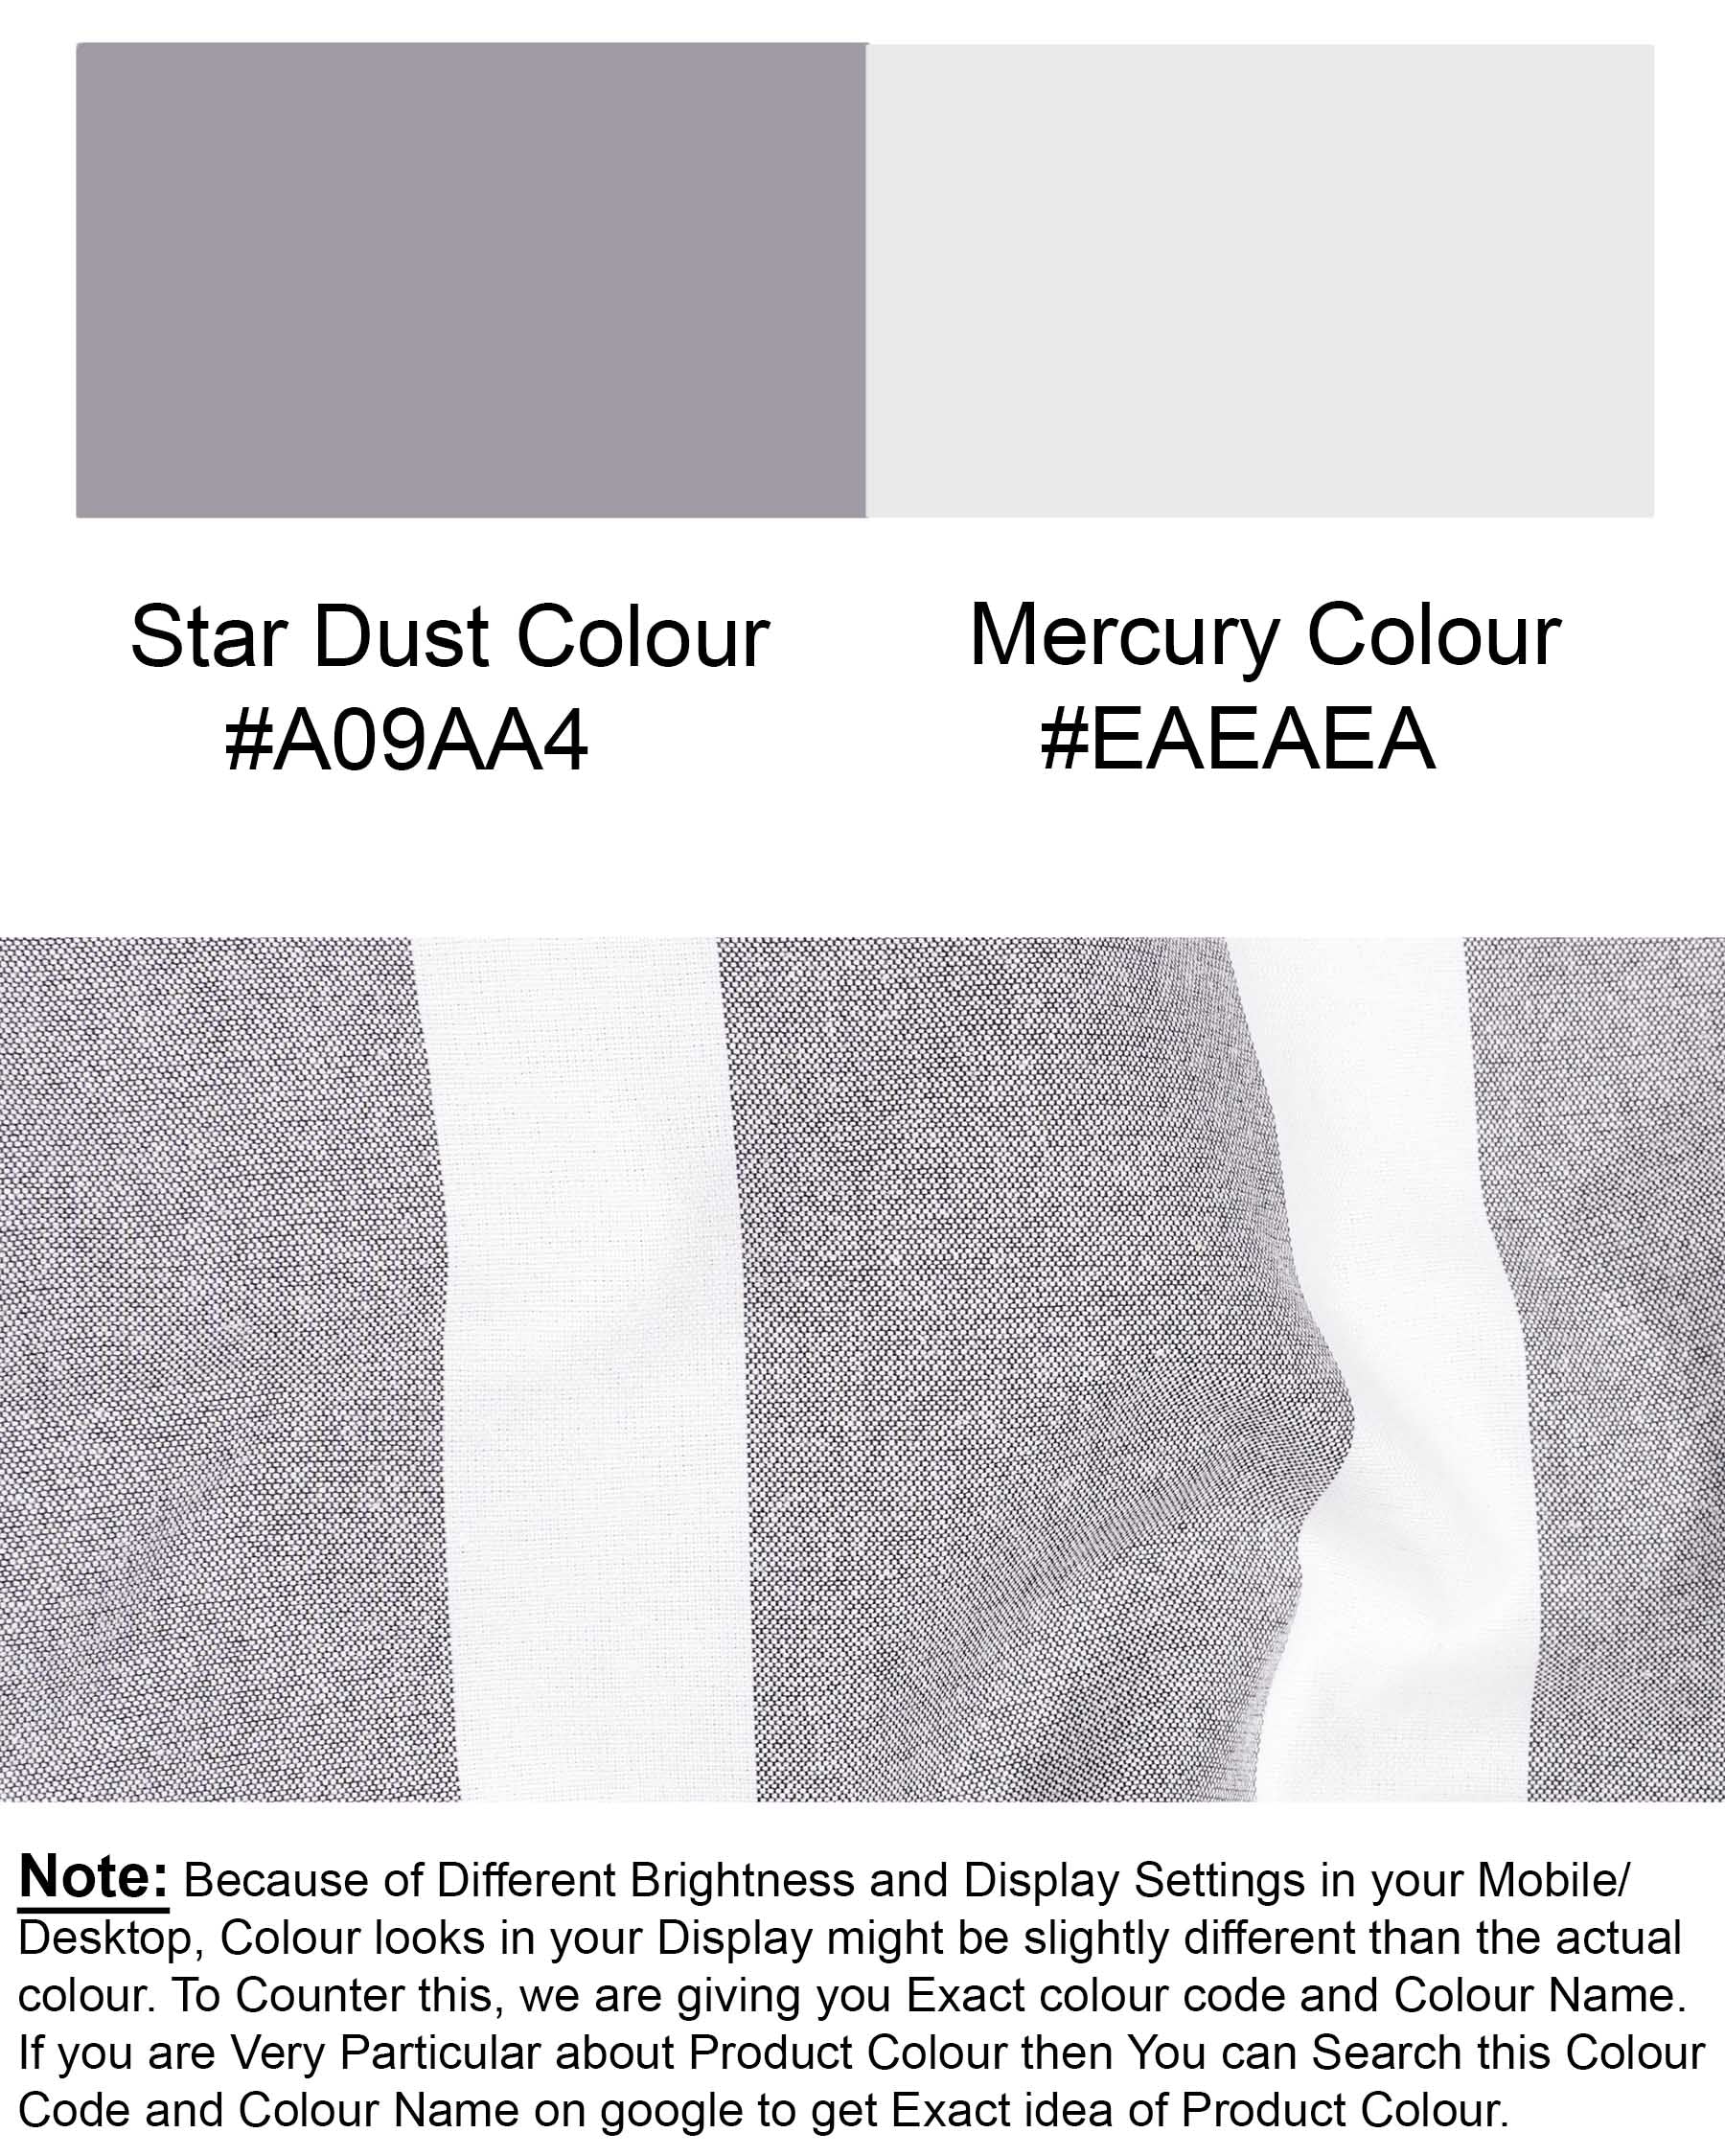 Star Dust Gray and White Striped Royal Oxford Shirt 7526-38, 7526-H-38, 7526-39, 7526-H-39, 7526-40, 7526-H-40, 7526-42, 7526-H-42, 7526-44, 7526-H-44, 7526-46, 7526-H-46, 7526-48, 7526-H-48, 7526-50, 7526-H-50, 7526-52, 7526-H-52